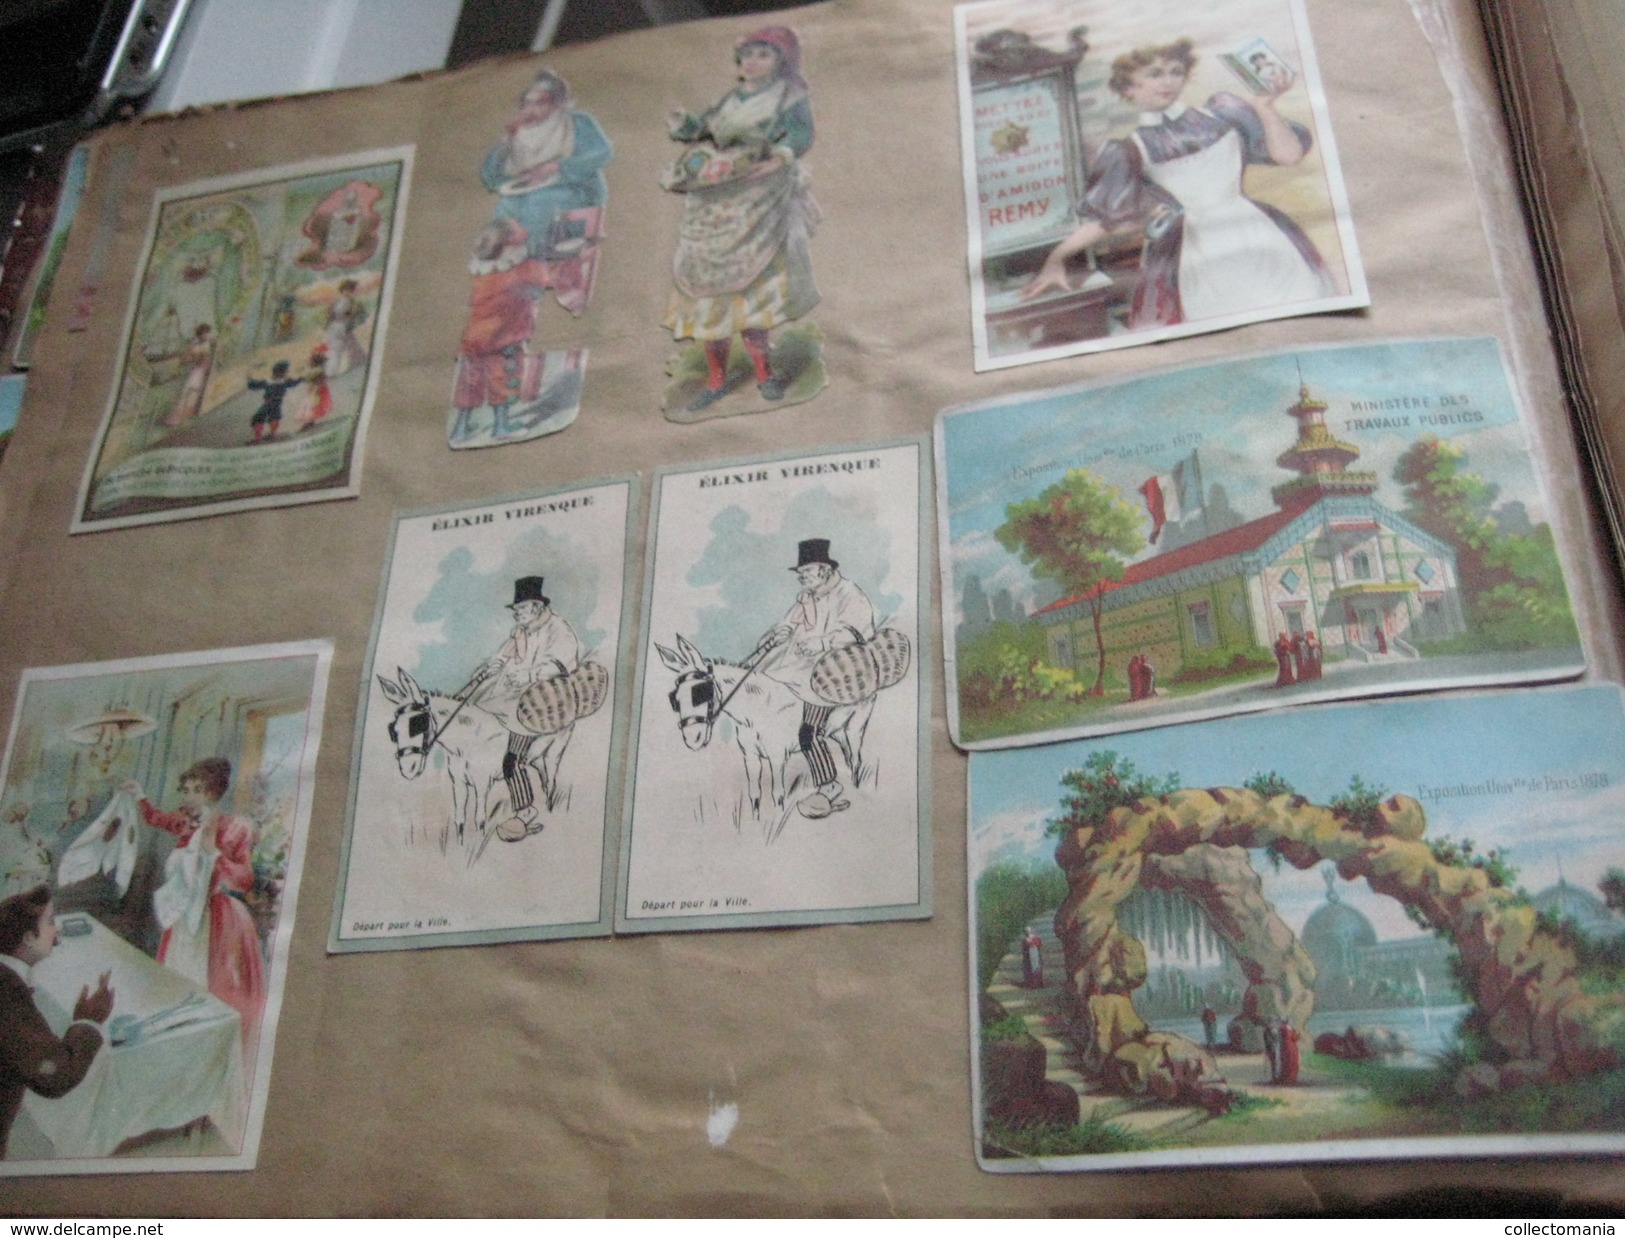 eAlbum around 1890, 100rds litho advertising cards, some compl. sets, hundreds of trade cards : Hunley & Palmer, Suchard